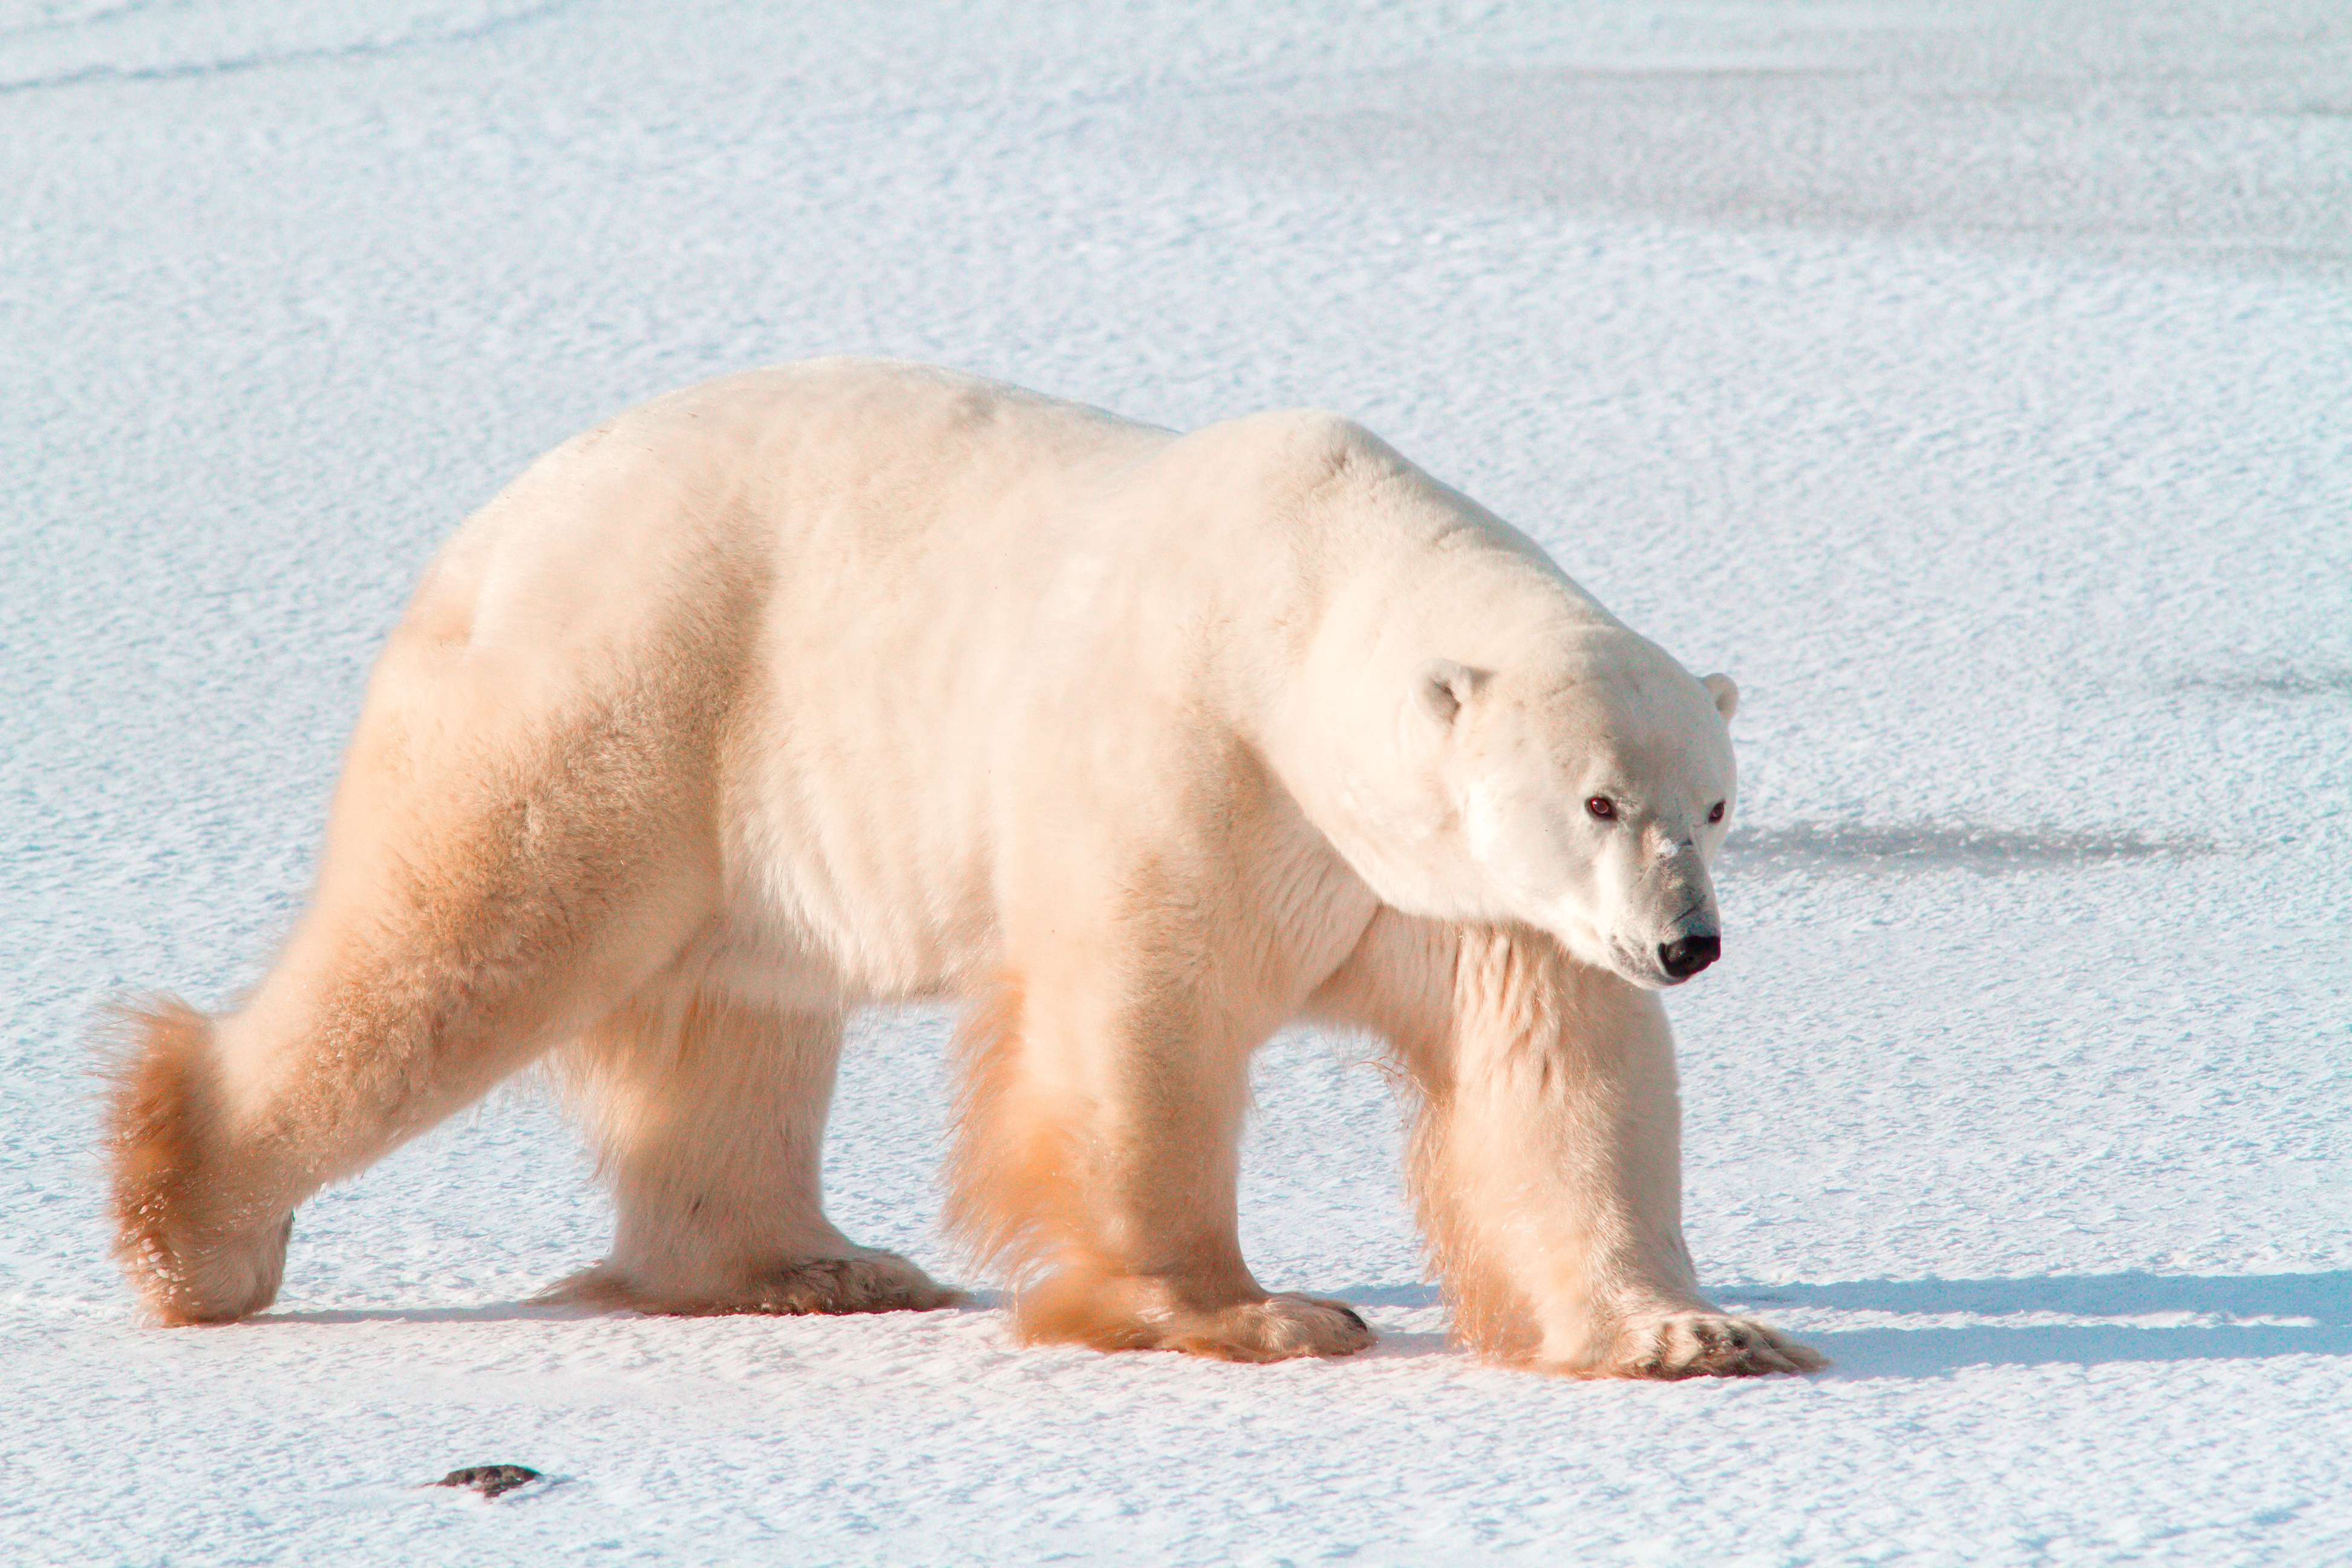 Polar bear walking on ice in Canada.